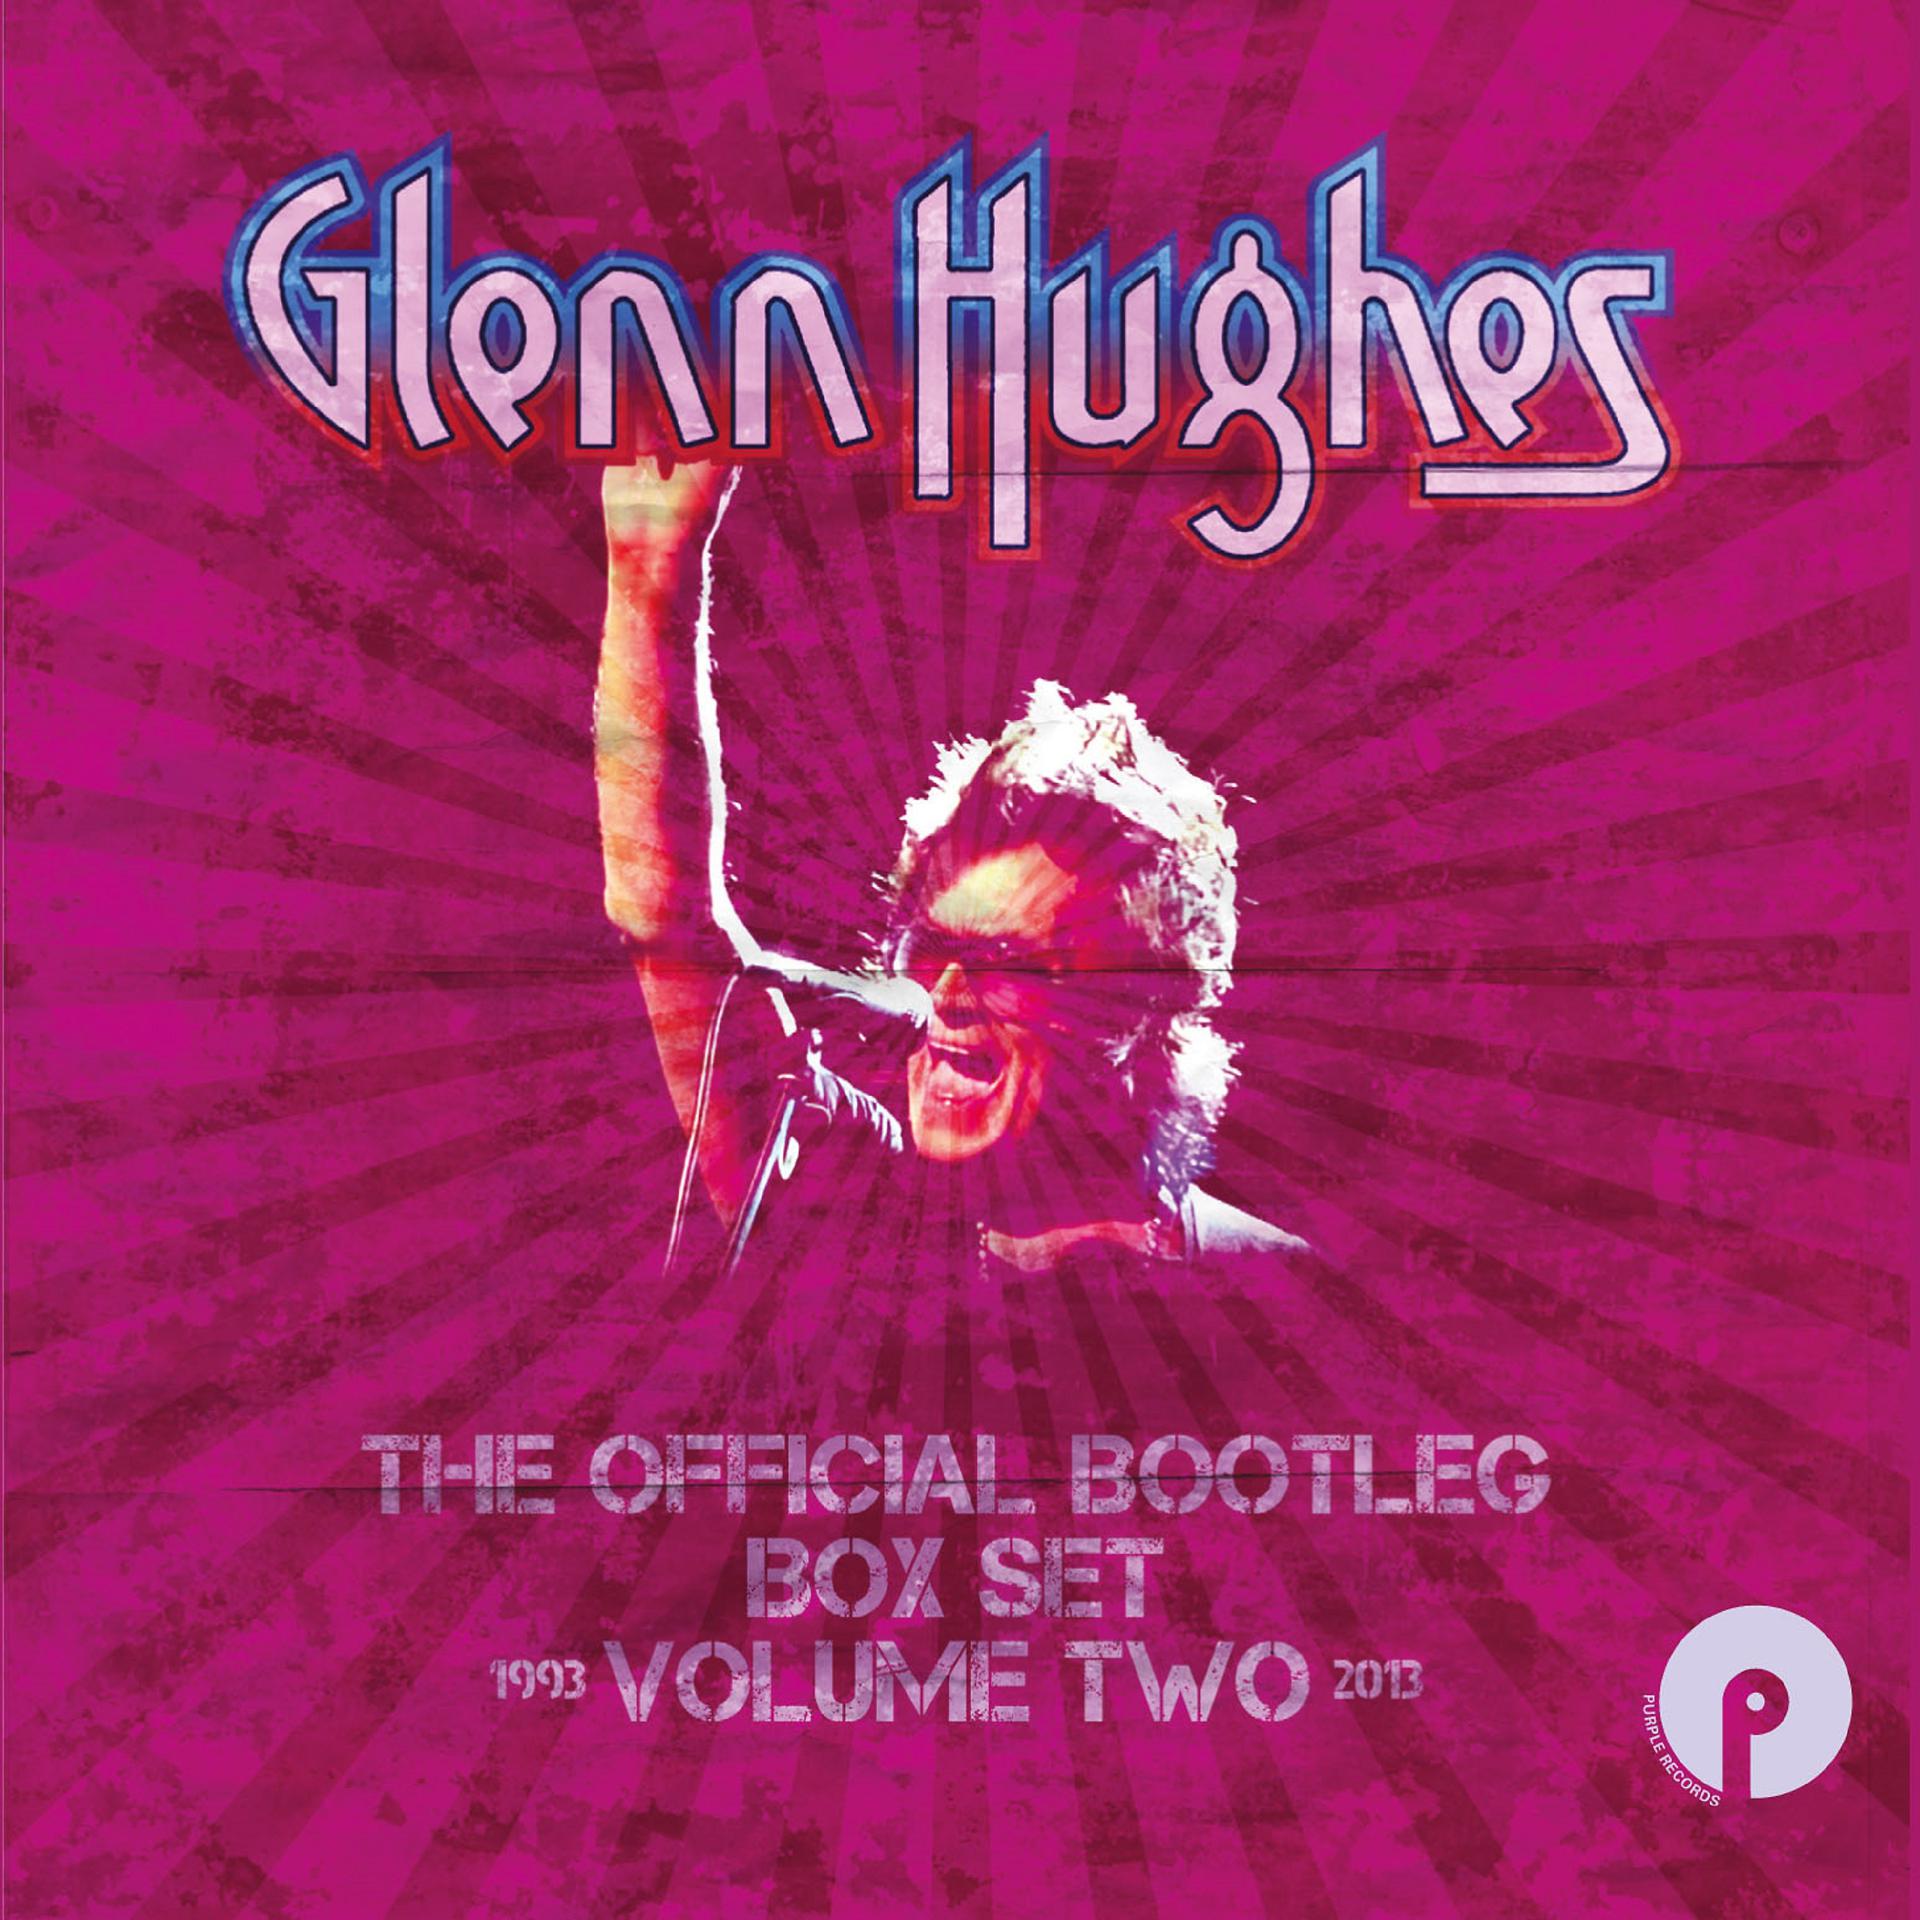 2013 1993. Обложки Гленн Хьюз. Glenn Hughes обложки альбомов. Glenn Hughes обложка. Glenn Hughes обложки альбомов from Now on.